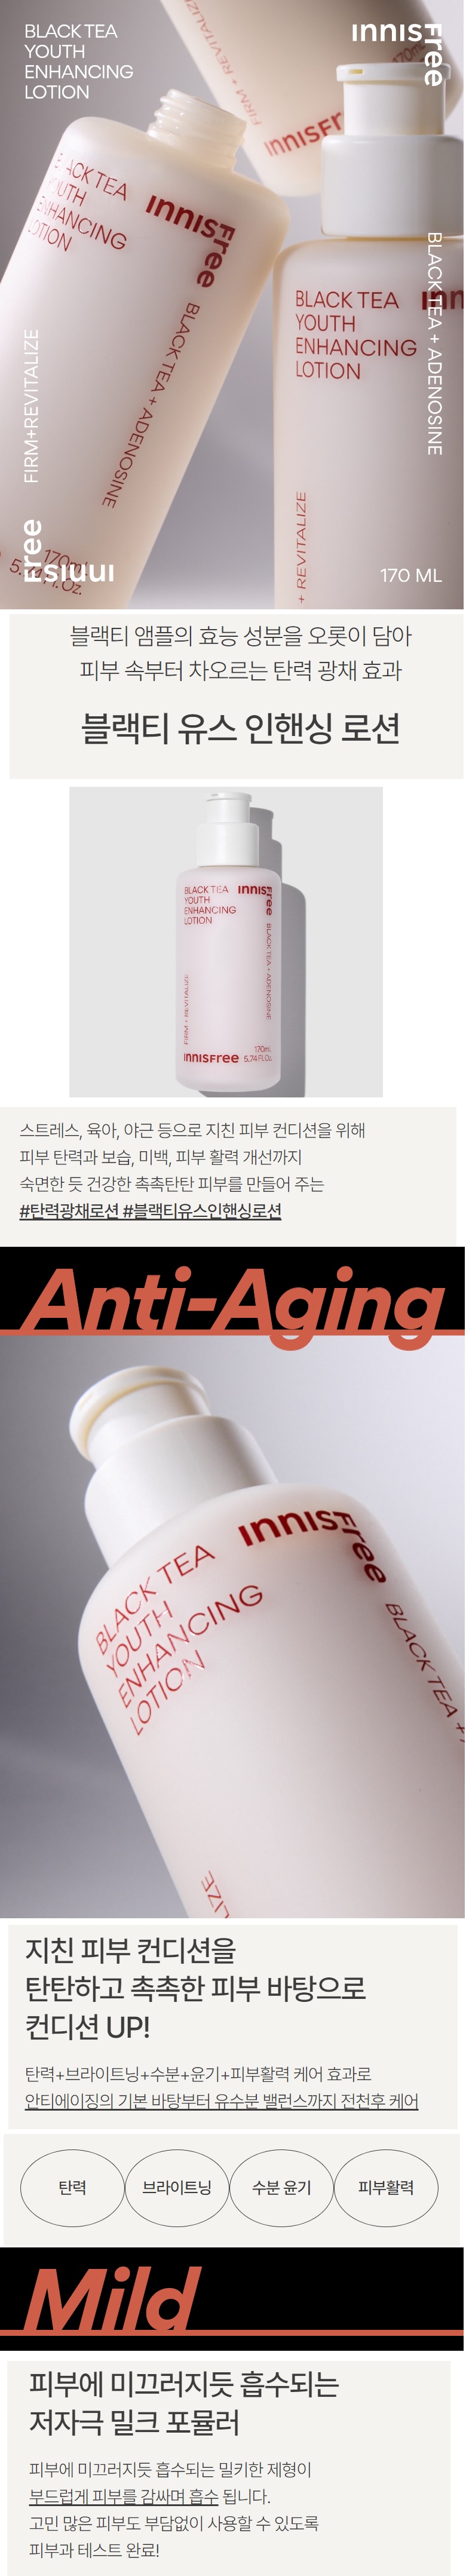 Innisfree Black Tea Youth Enhancing Lotion korean skincare product online shop malaysia china poland1